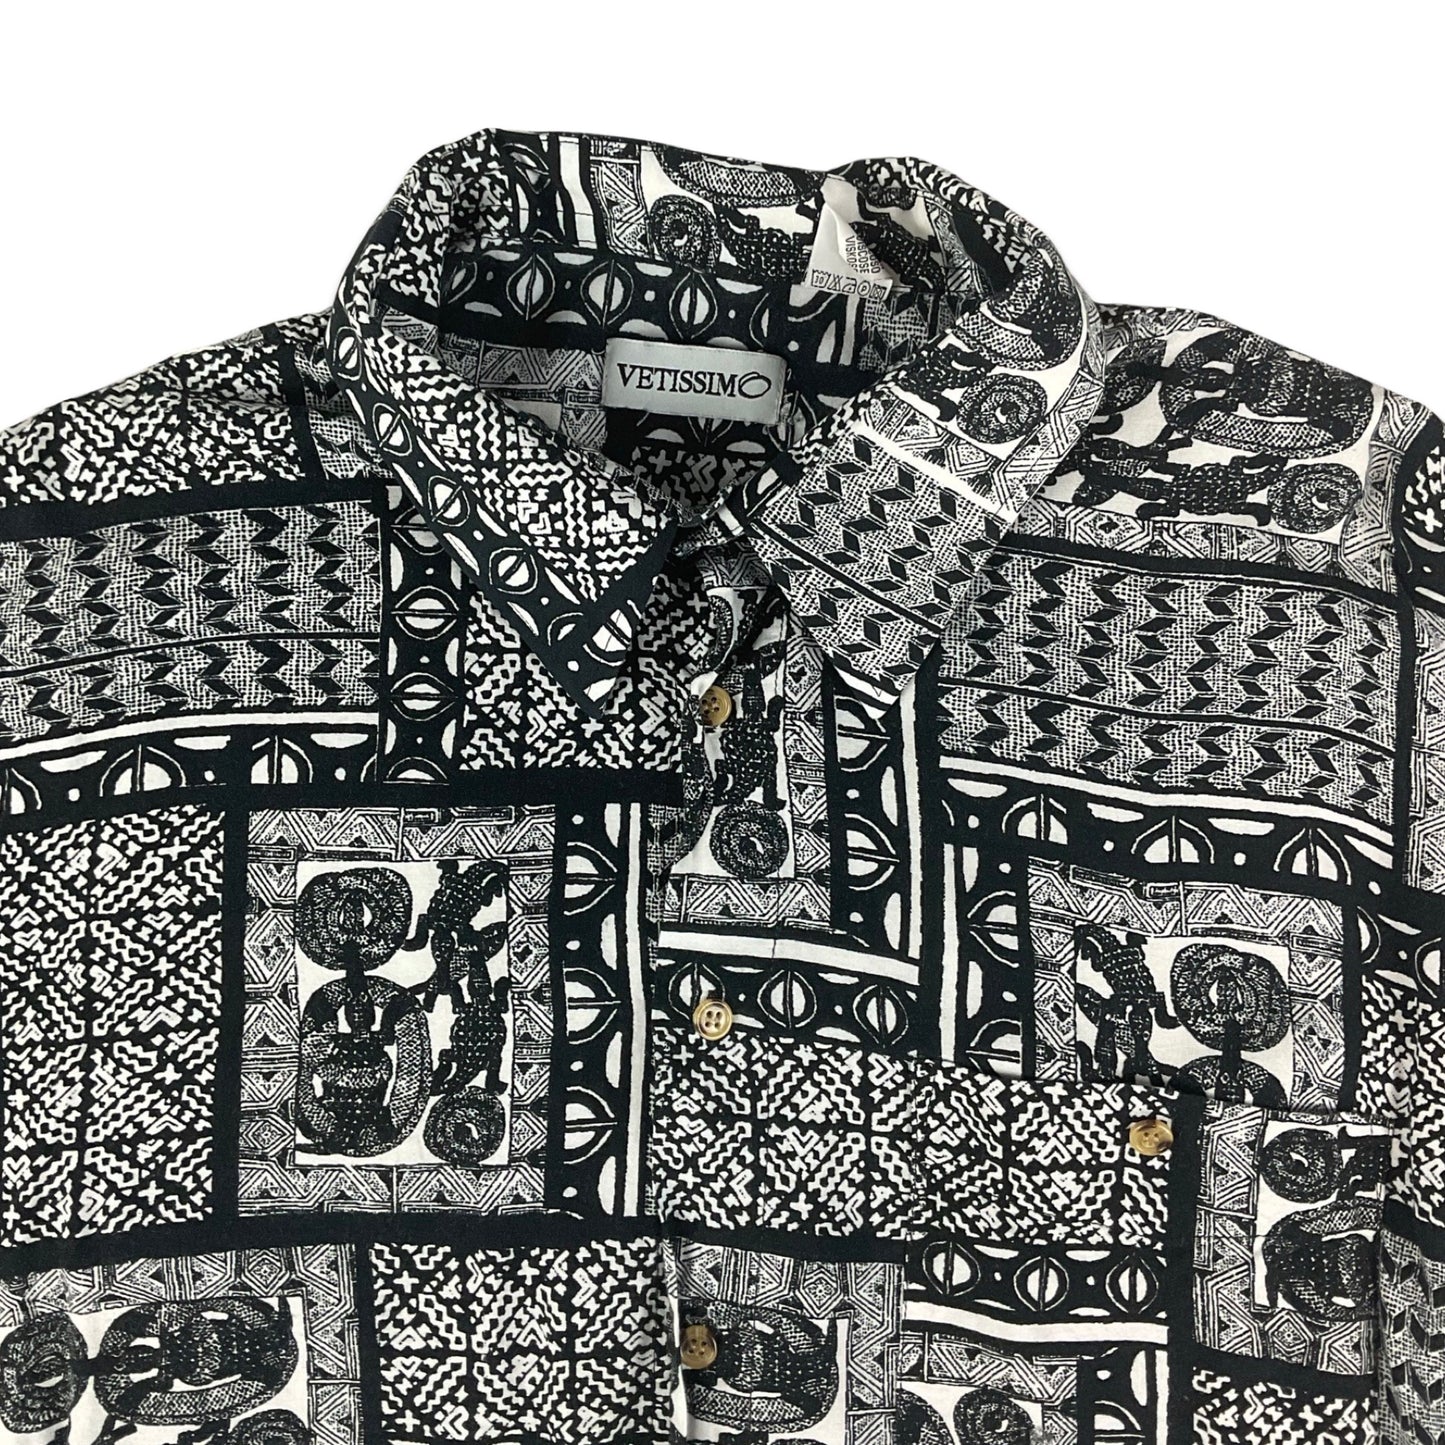 Vintage Black & White Tribal Pattern Short Sleeve Shirt 2XL